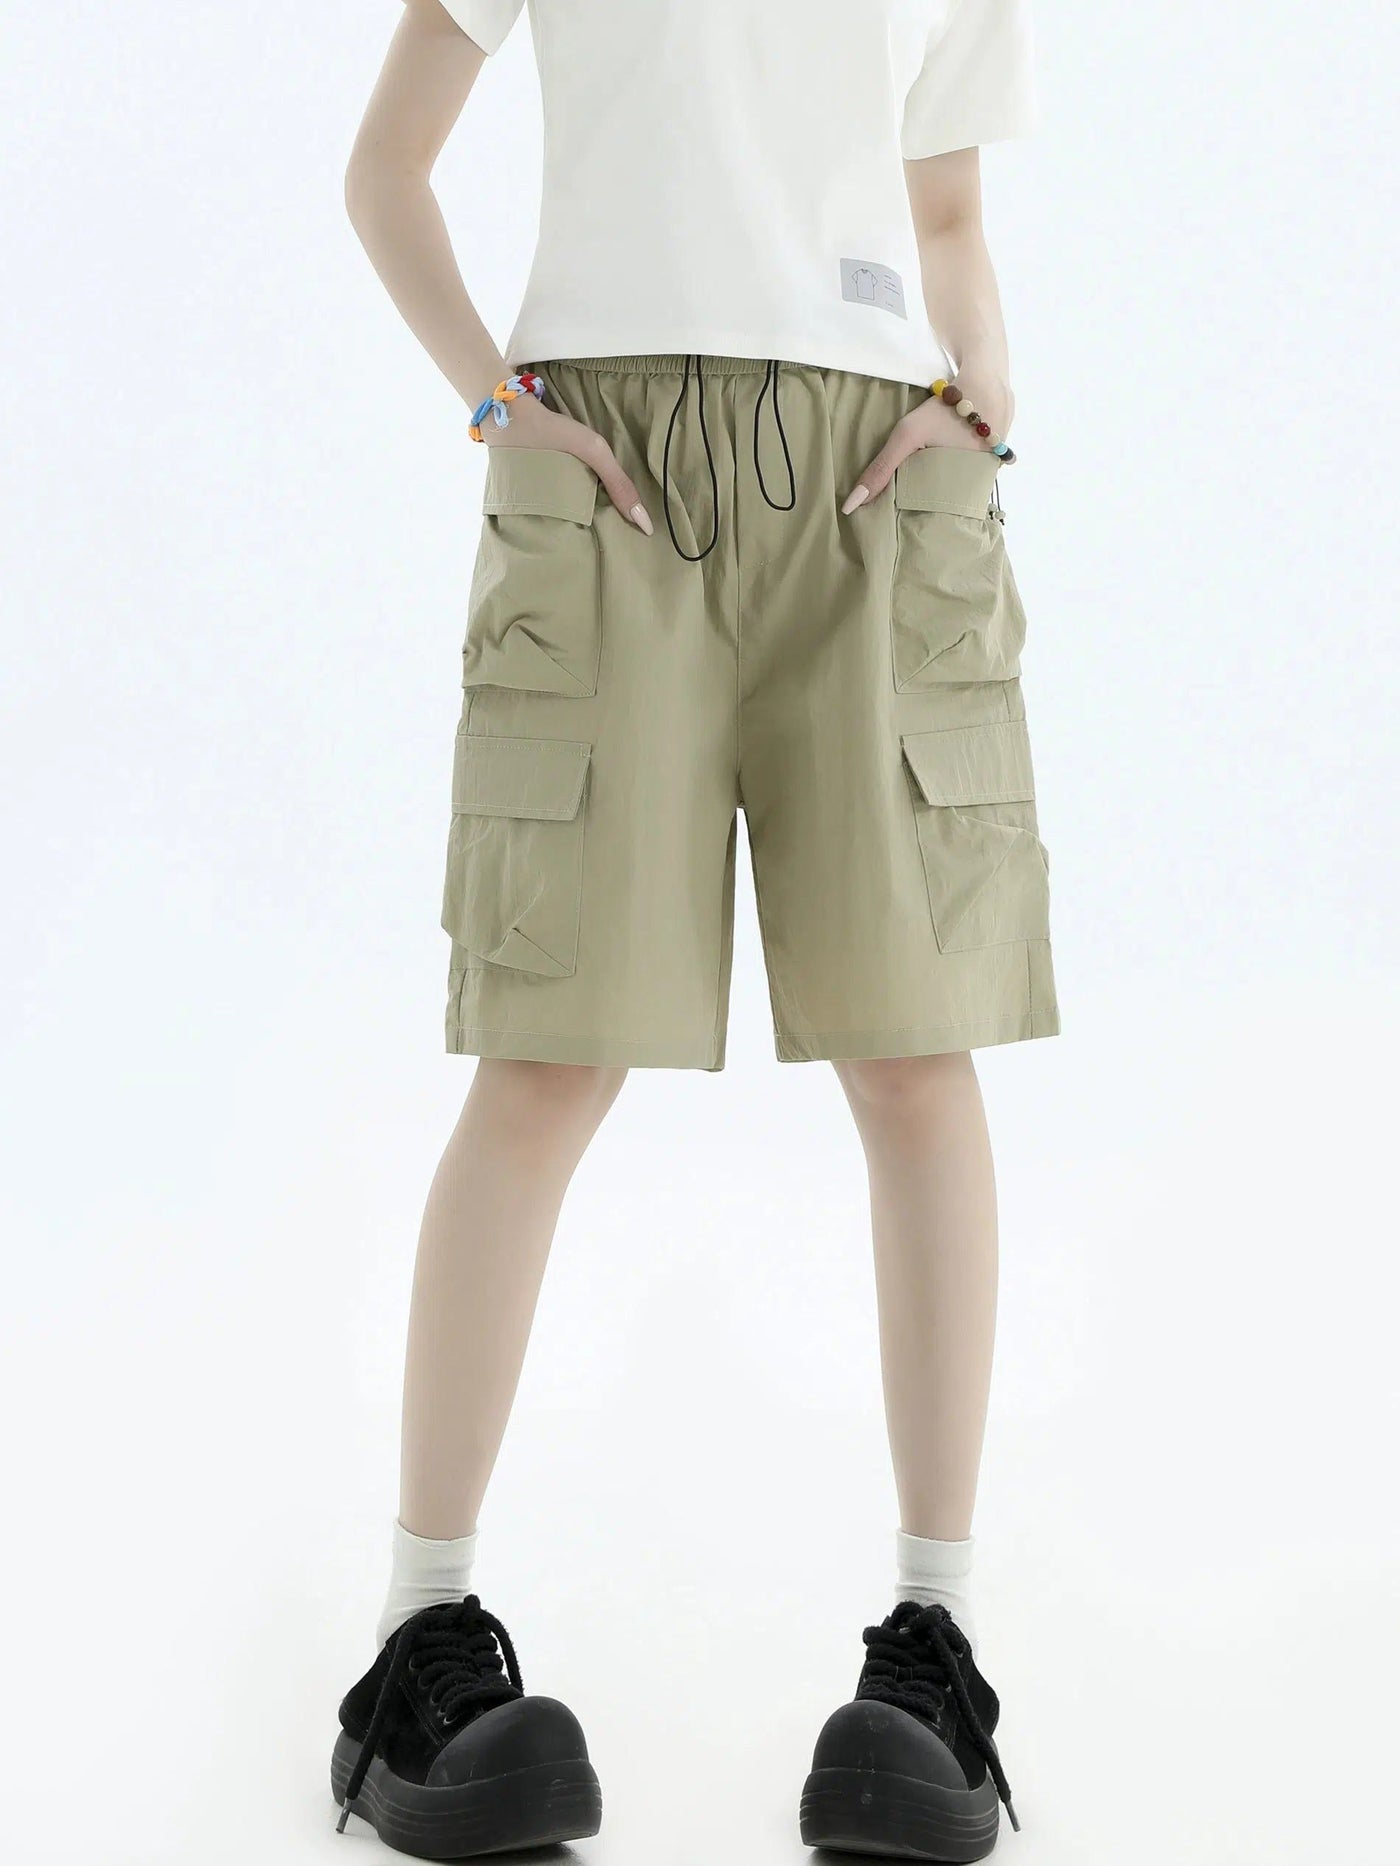 Gartered Drawstring Cargo Shorts Korean Street Fashion Shorts By INS Korea Shop Online at OH Vault